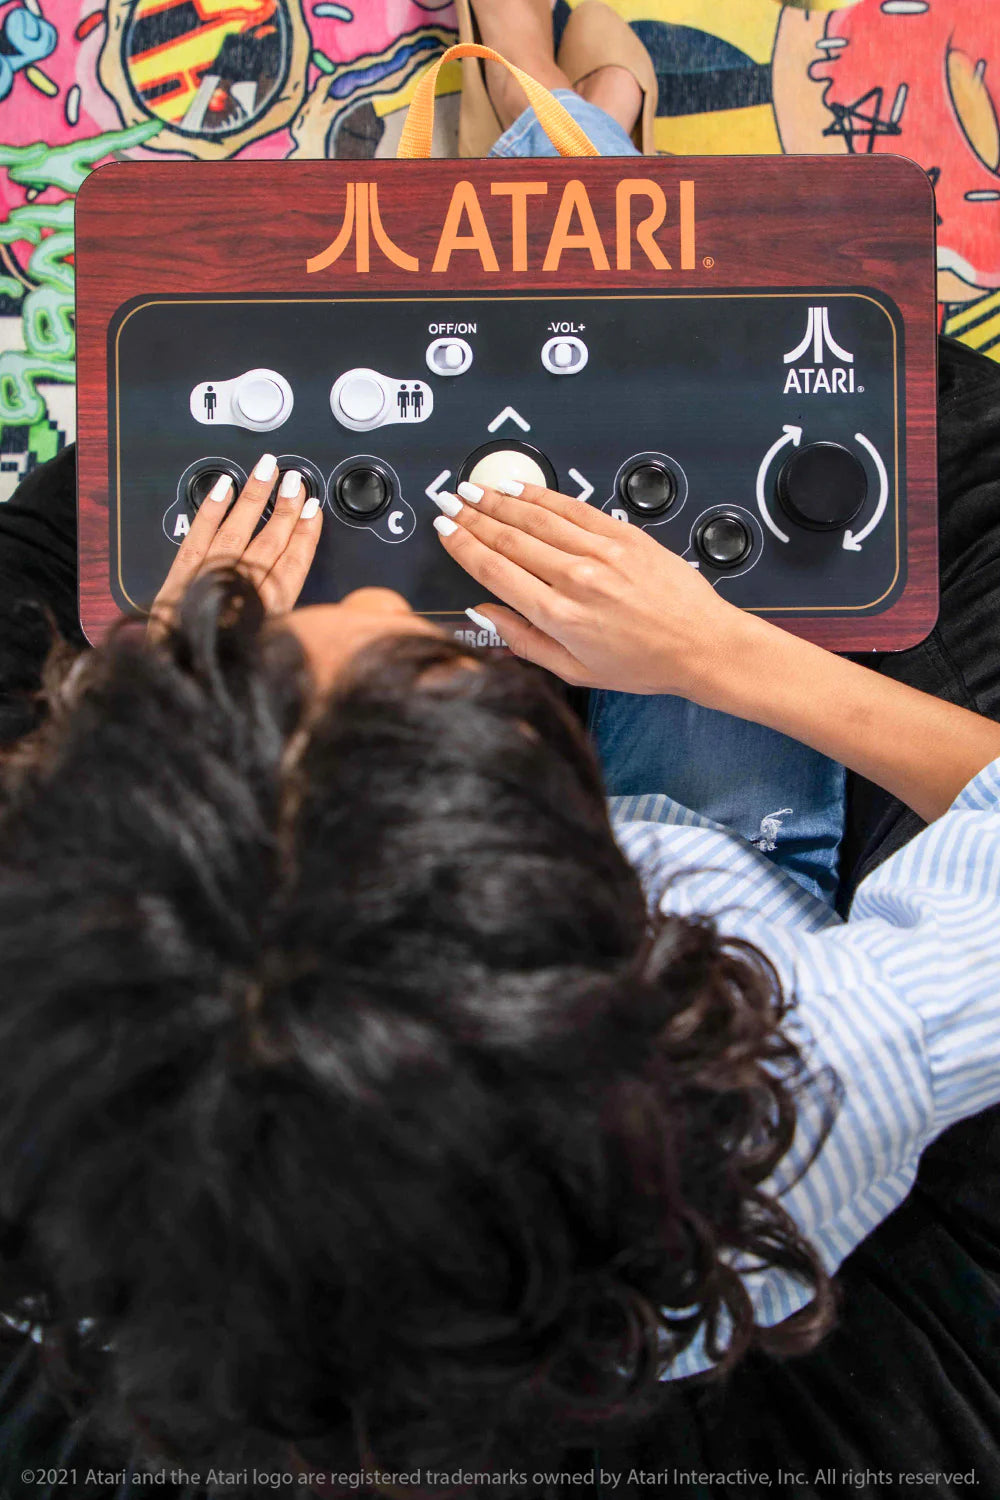 ARCADE 1 Up - Atari Couchcade - Cast Arcade Games to your TV!